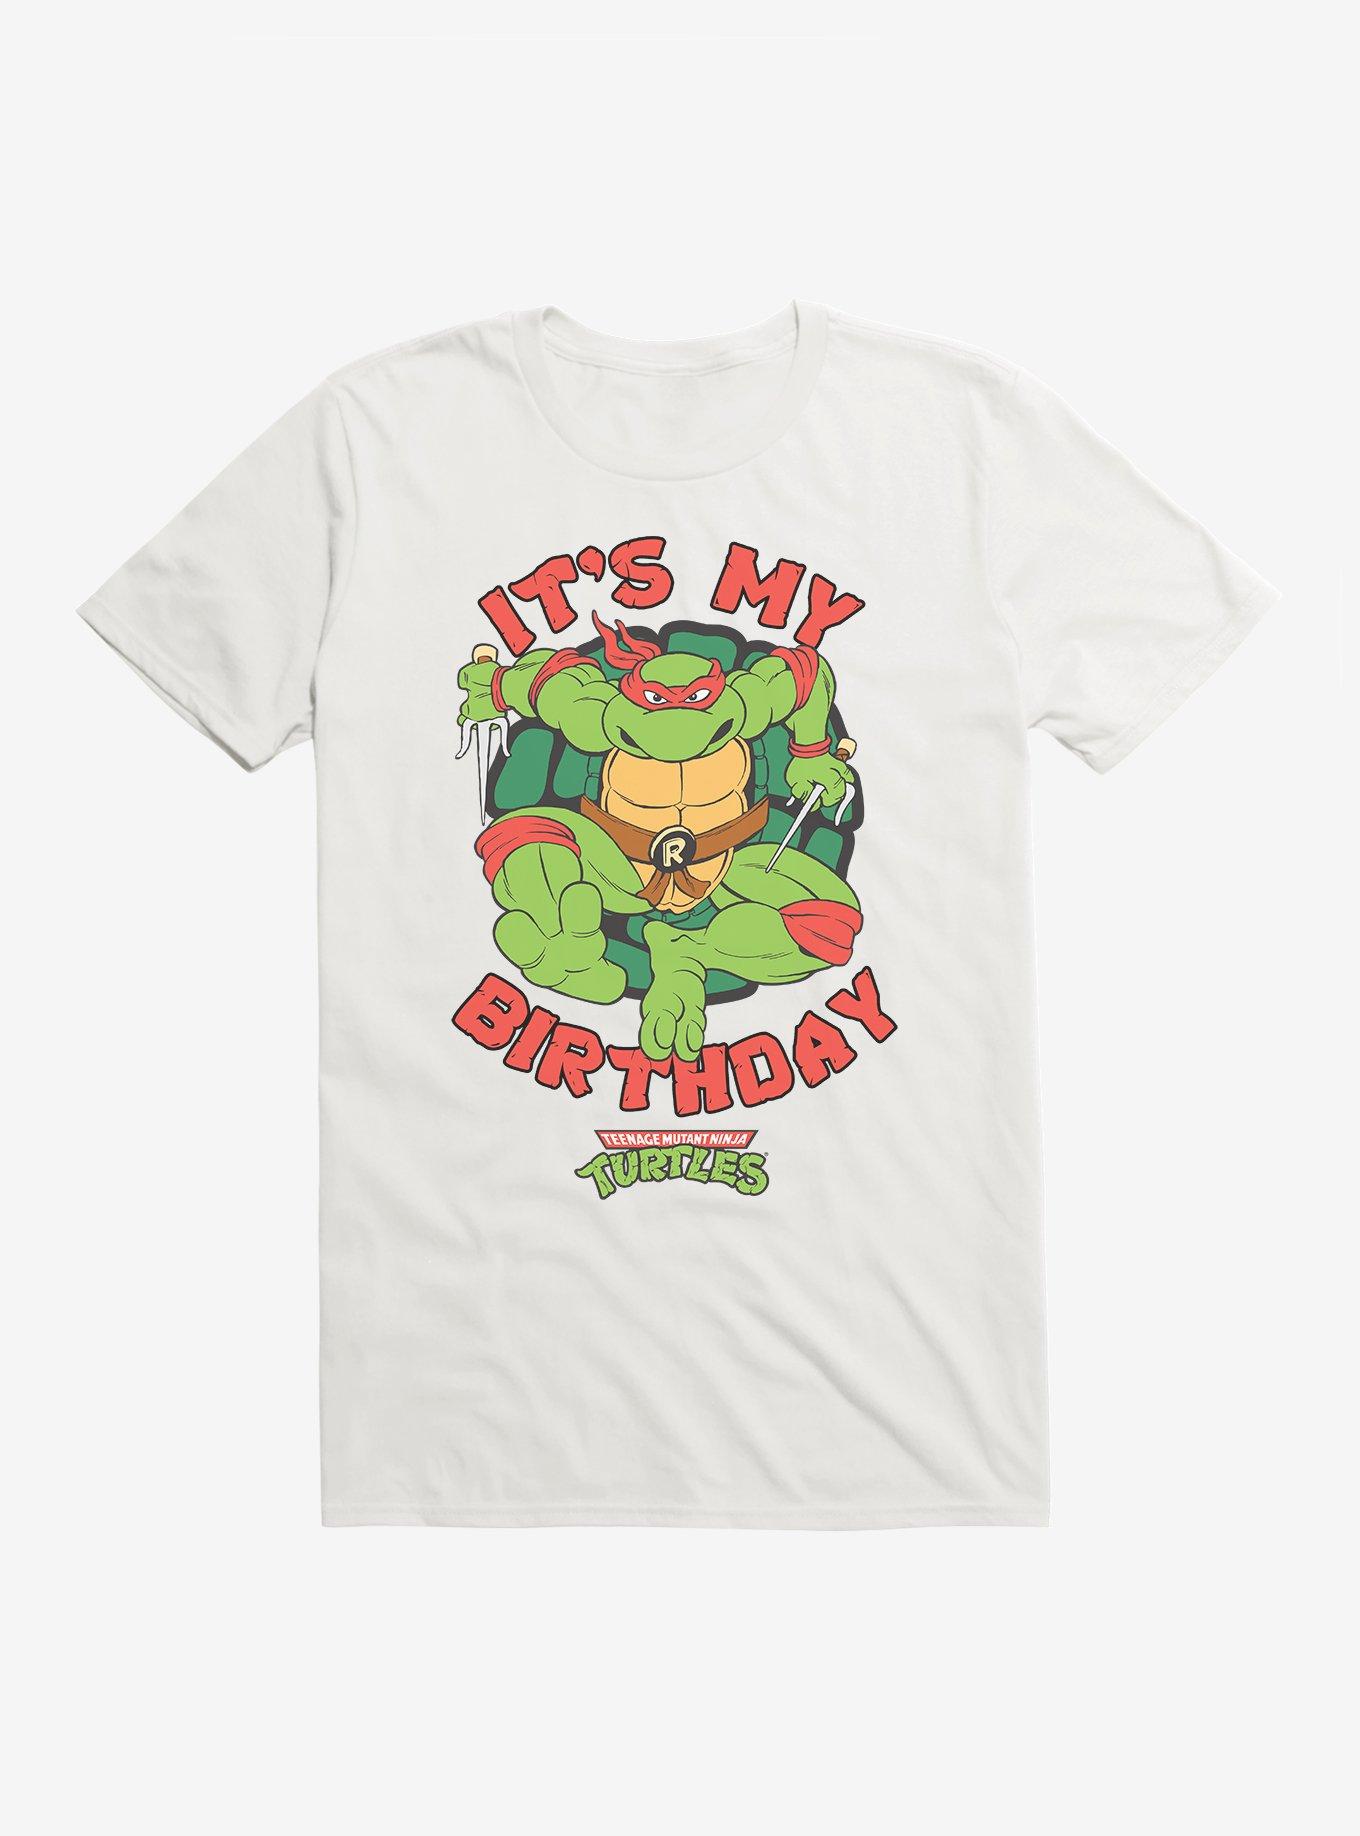 Ninja Turtles Vintage Birthday Shirt, Customizable, Add Name T-shirt